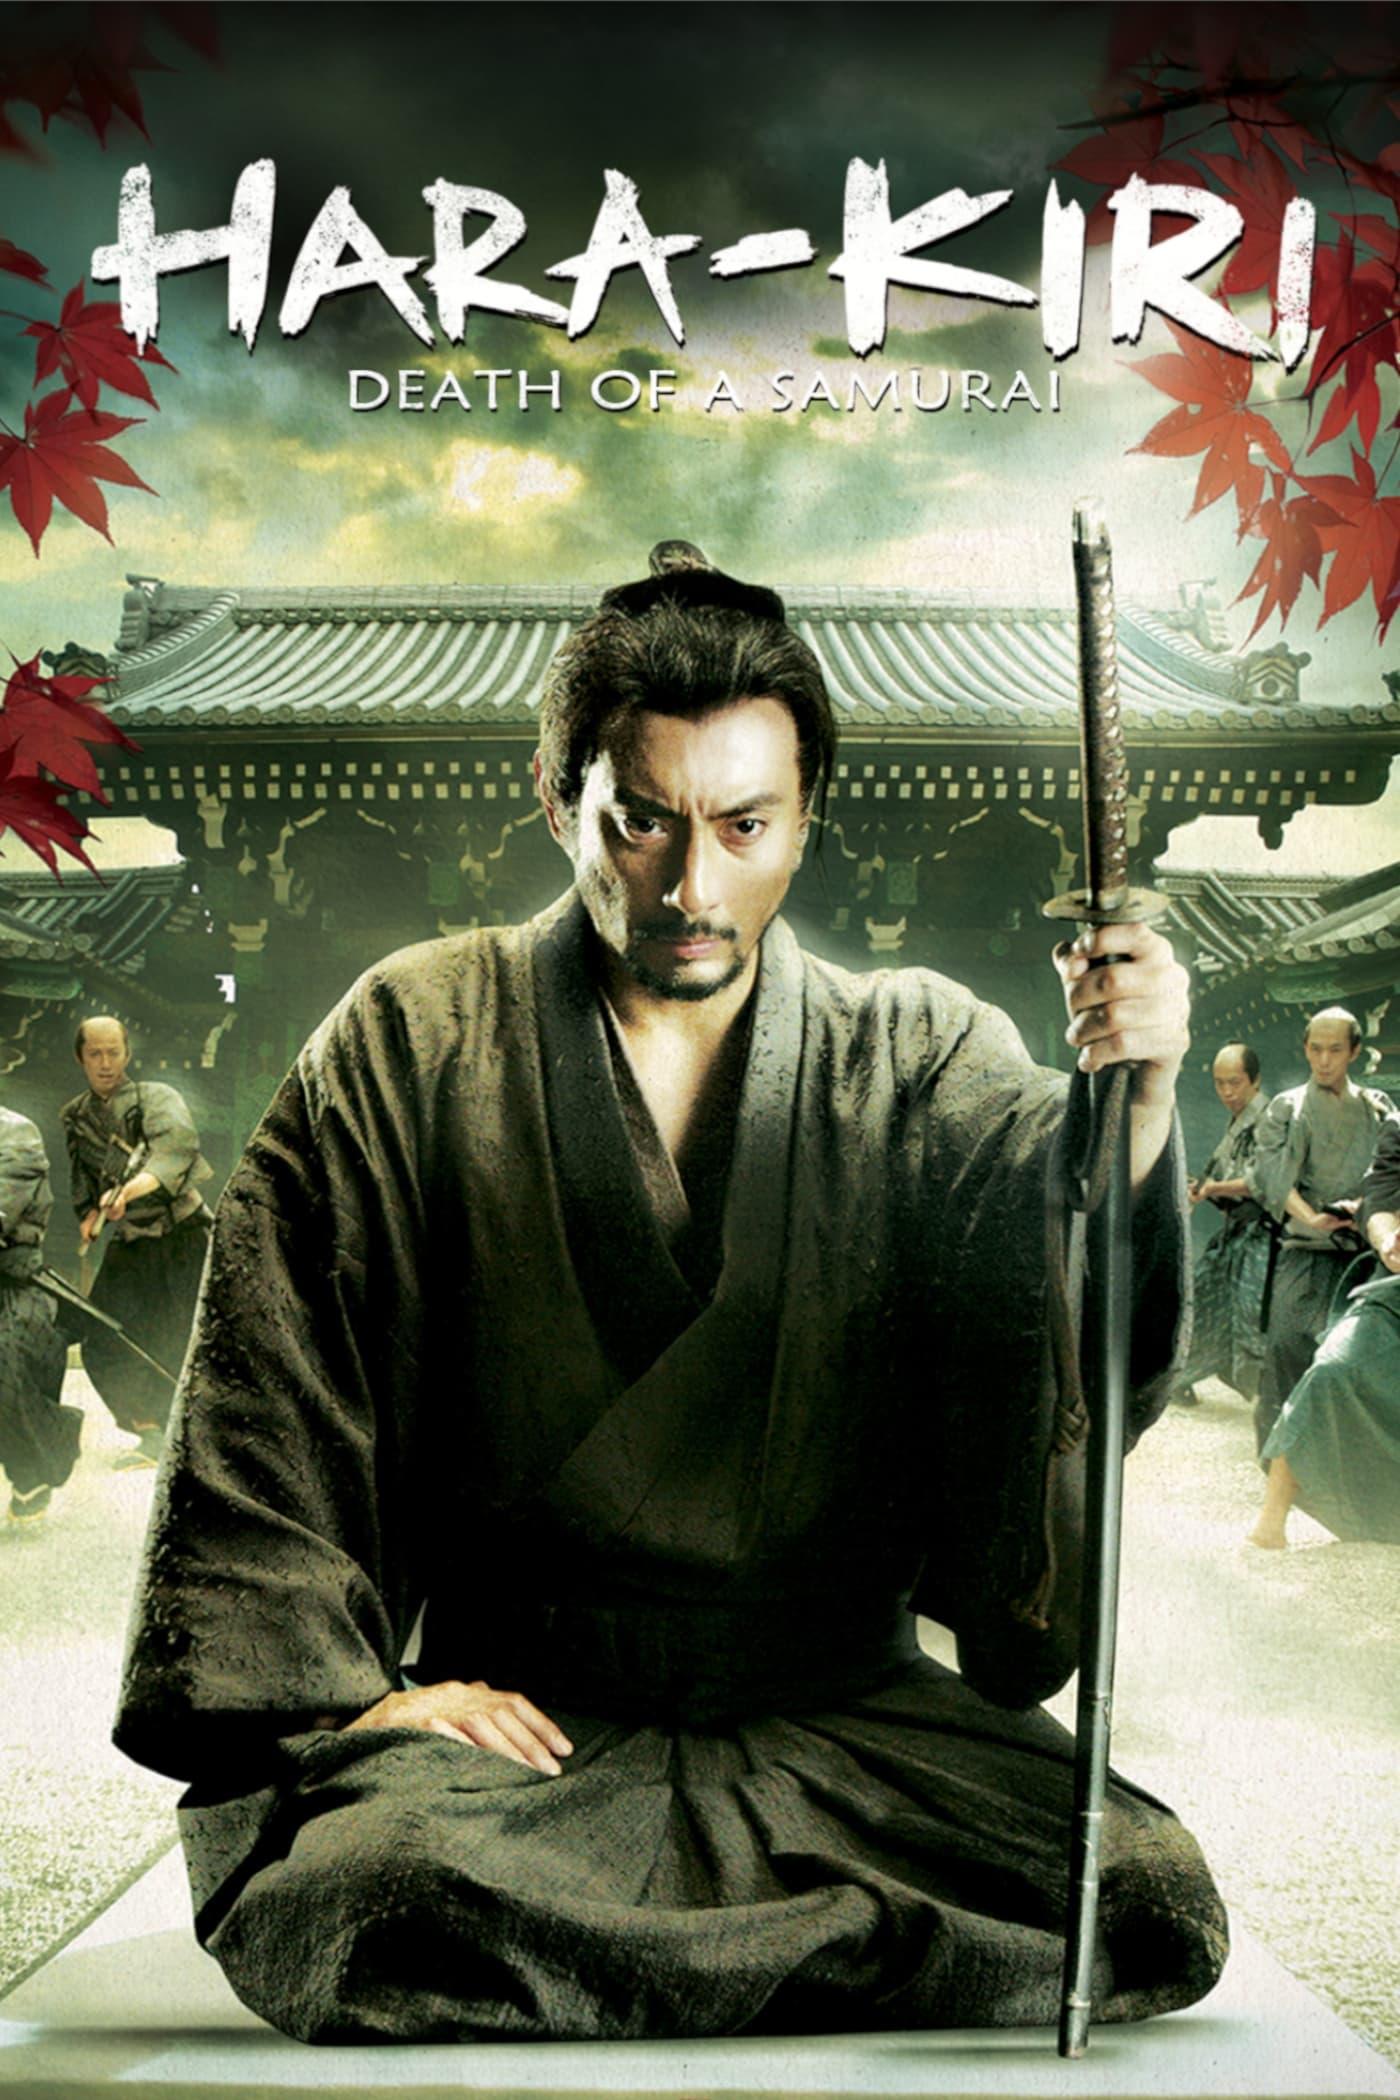 Hara-Kiri: Death of a Samurai poster